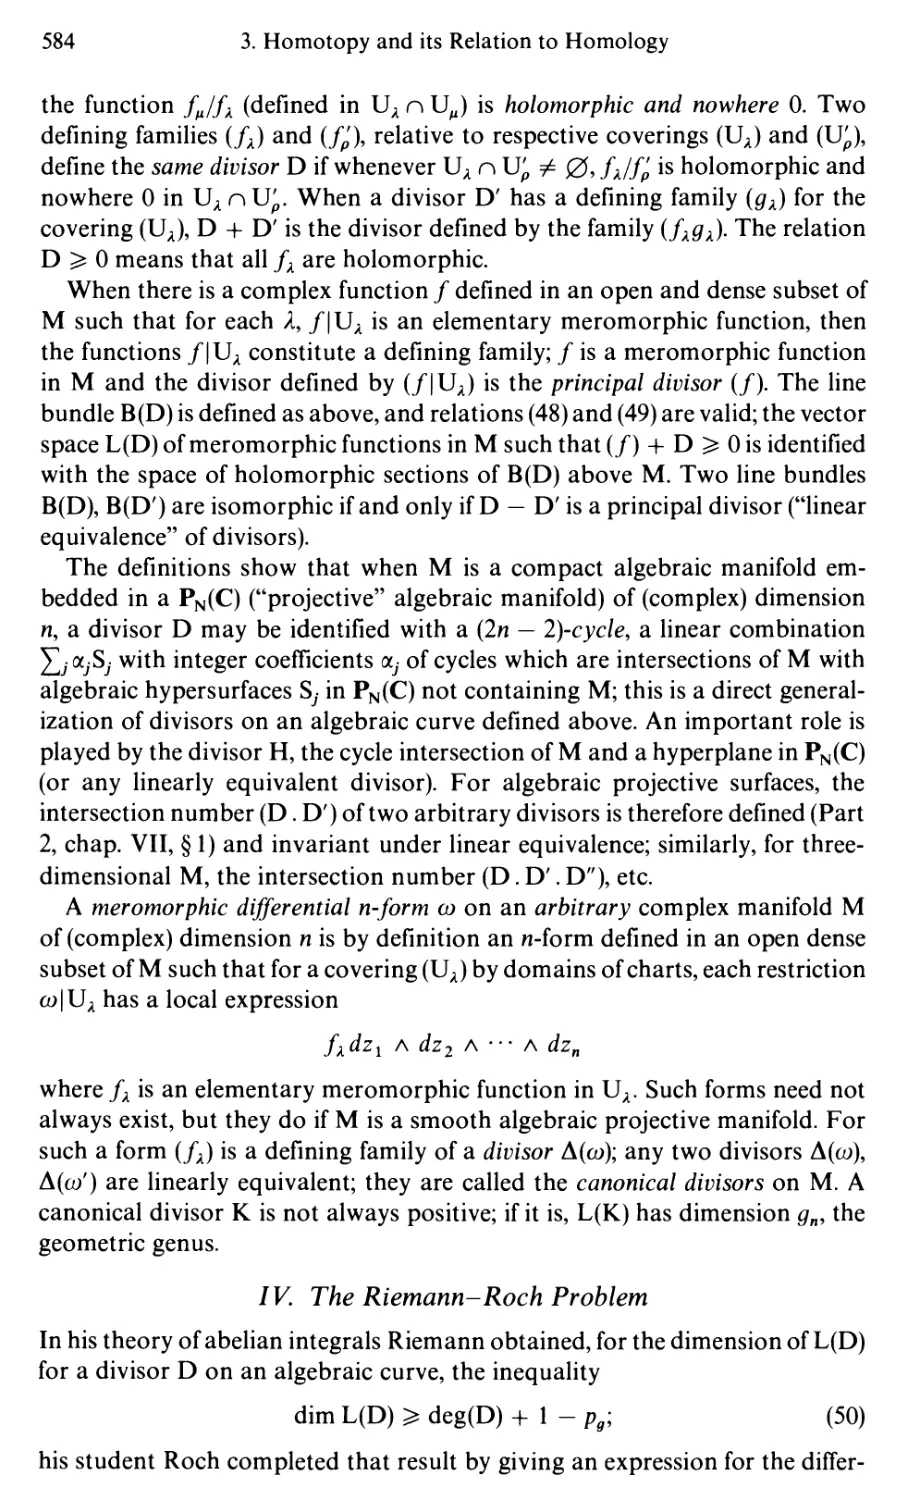 IV. The Riemann-Roch Problem